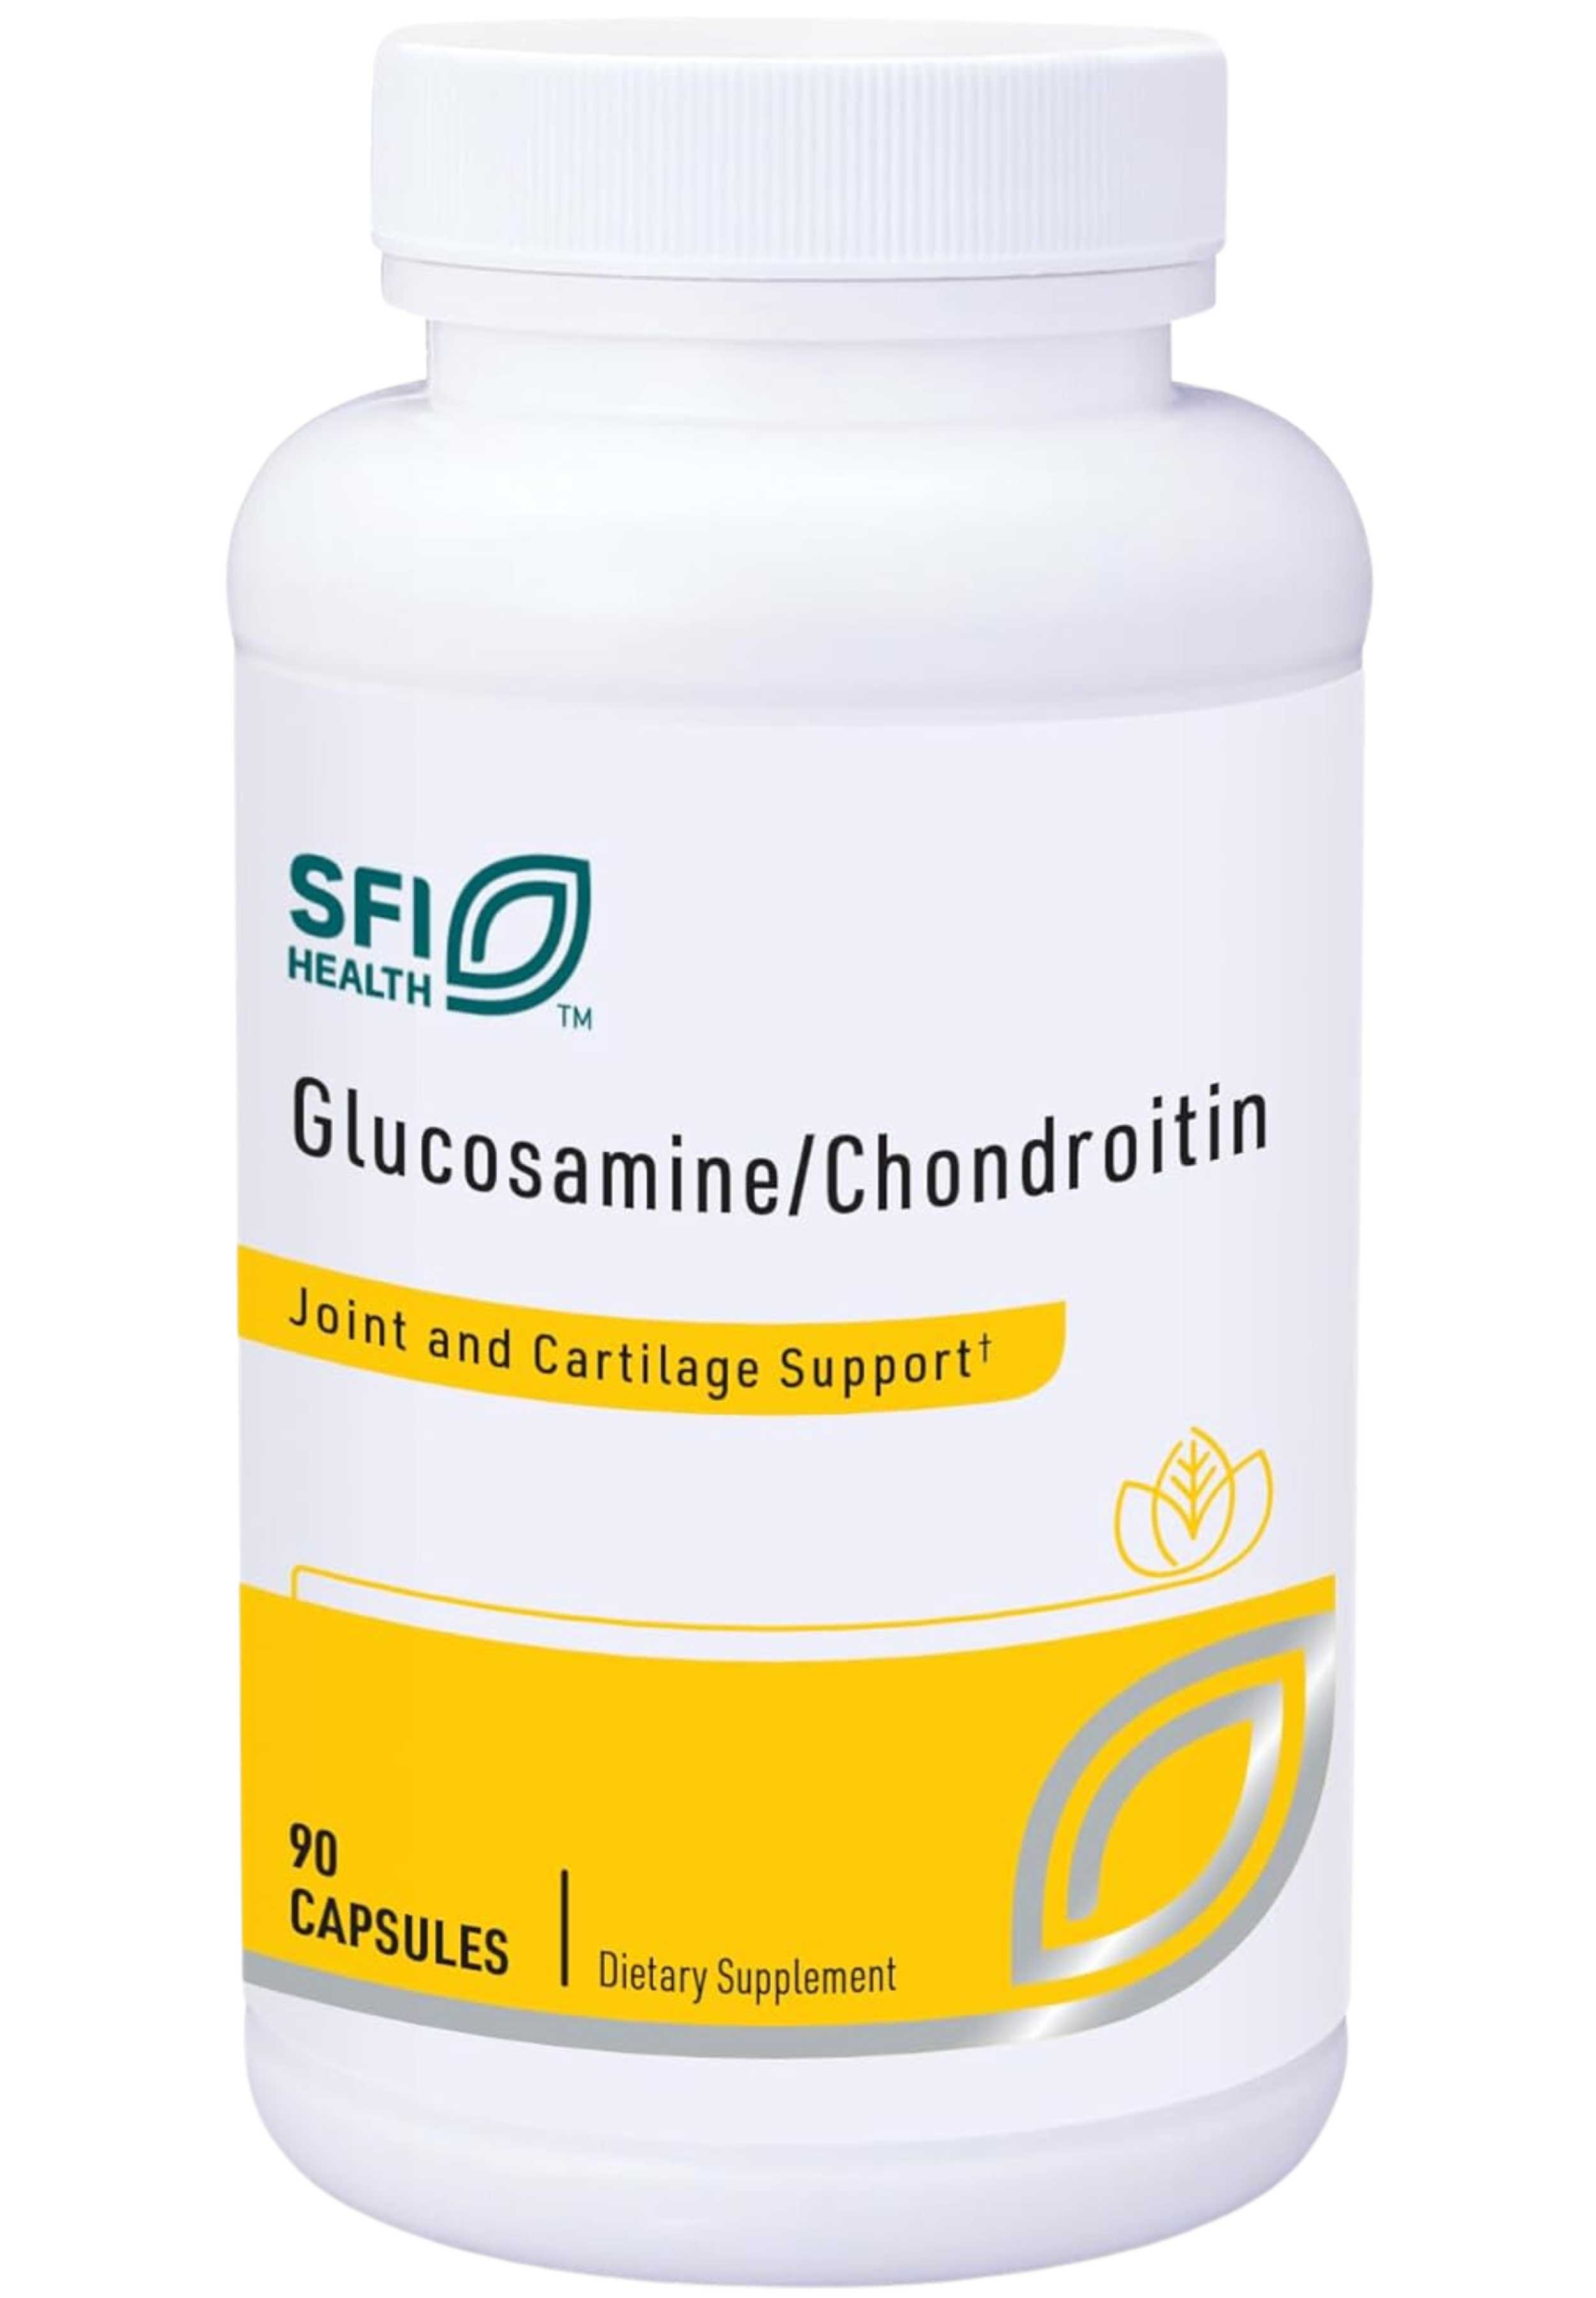 Klaire Labs Glucosamine/Chondroitin